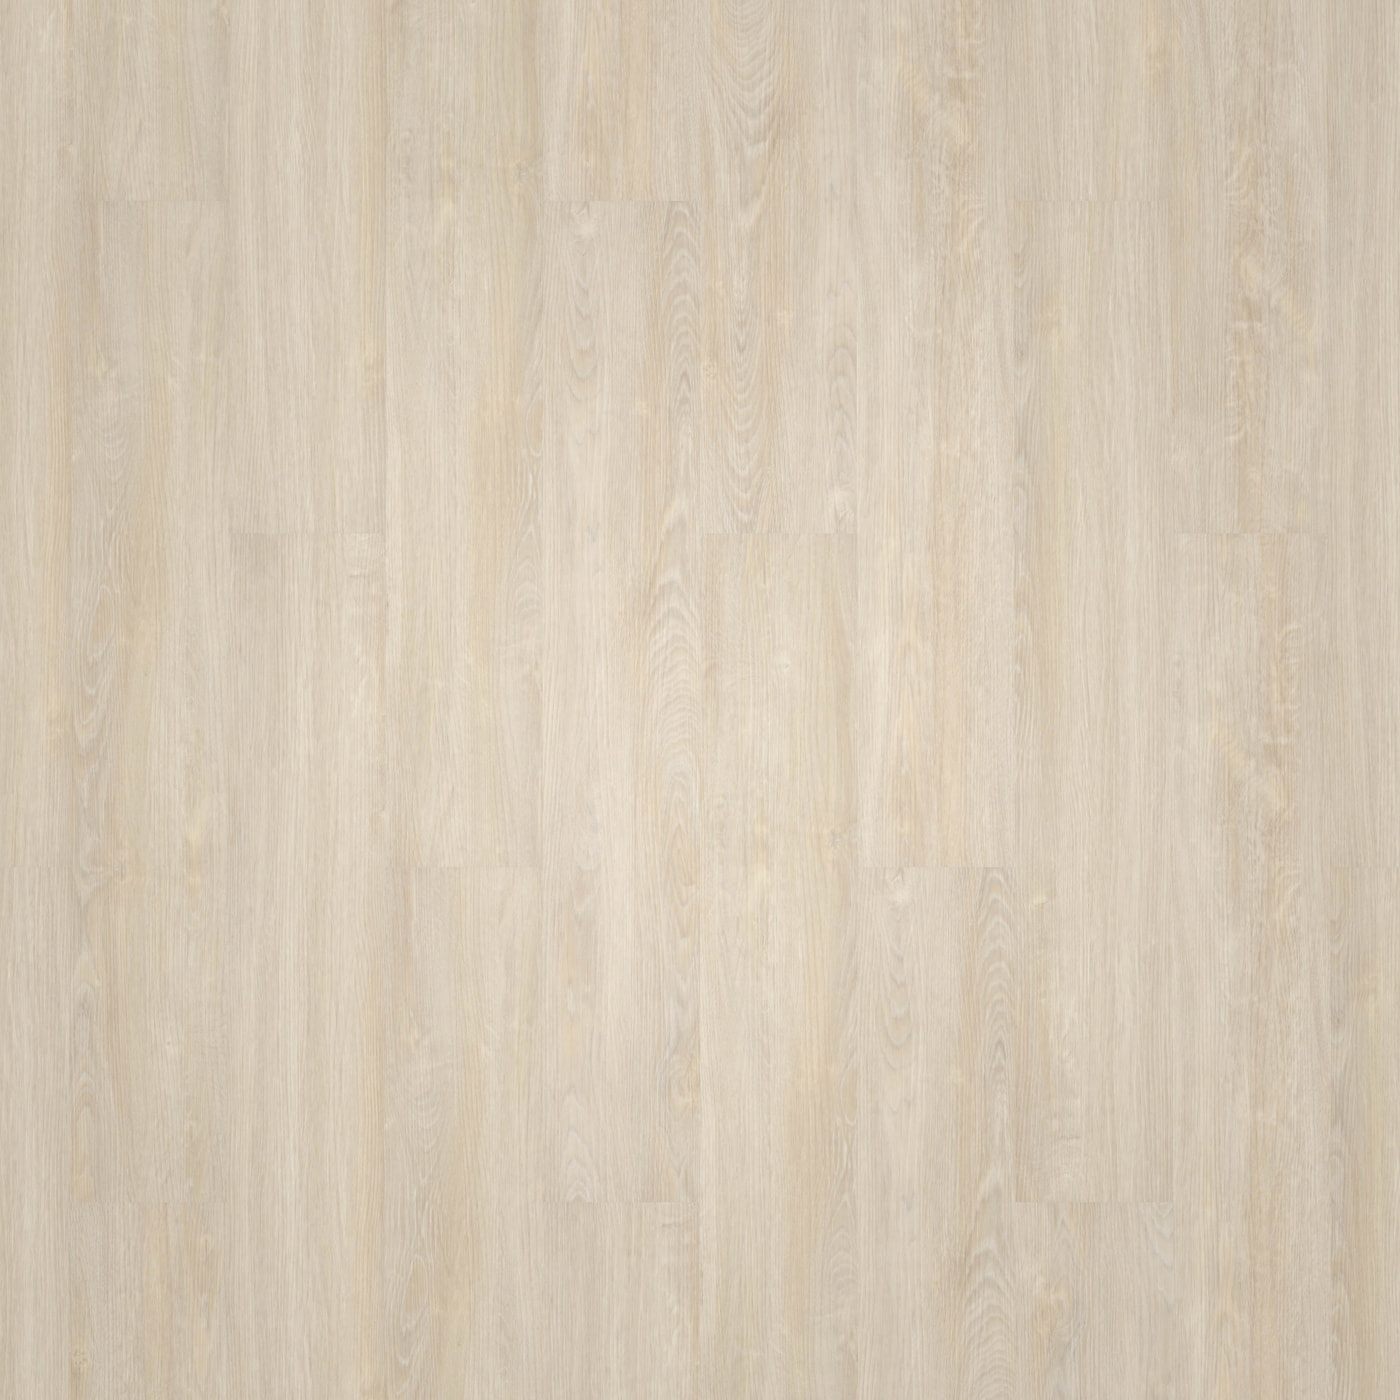 wineo Klick-Vinyl wineo 800 wood Salt Lake Oak Exklusive Holzstruktur